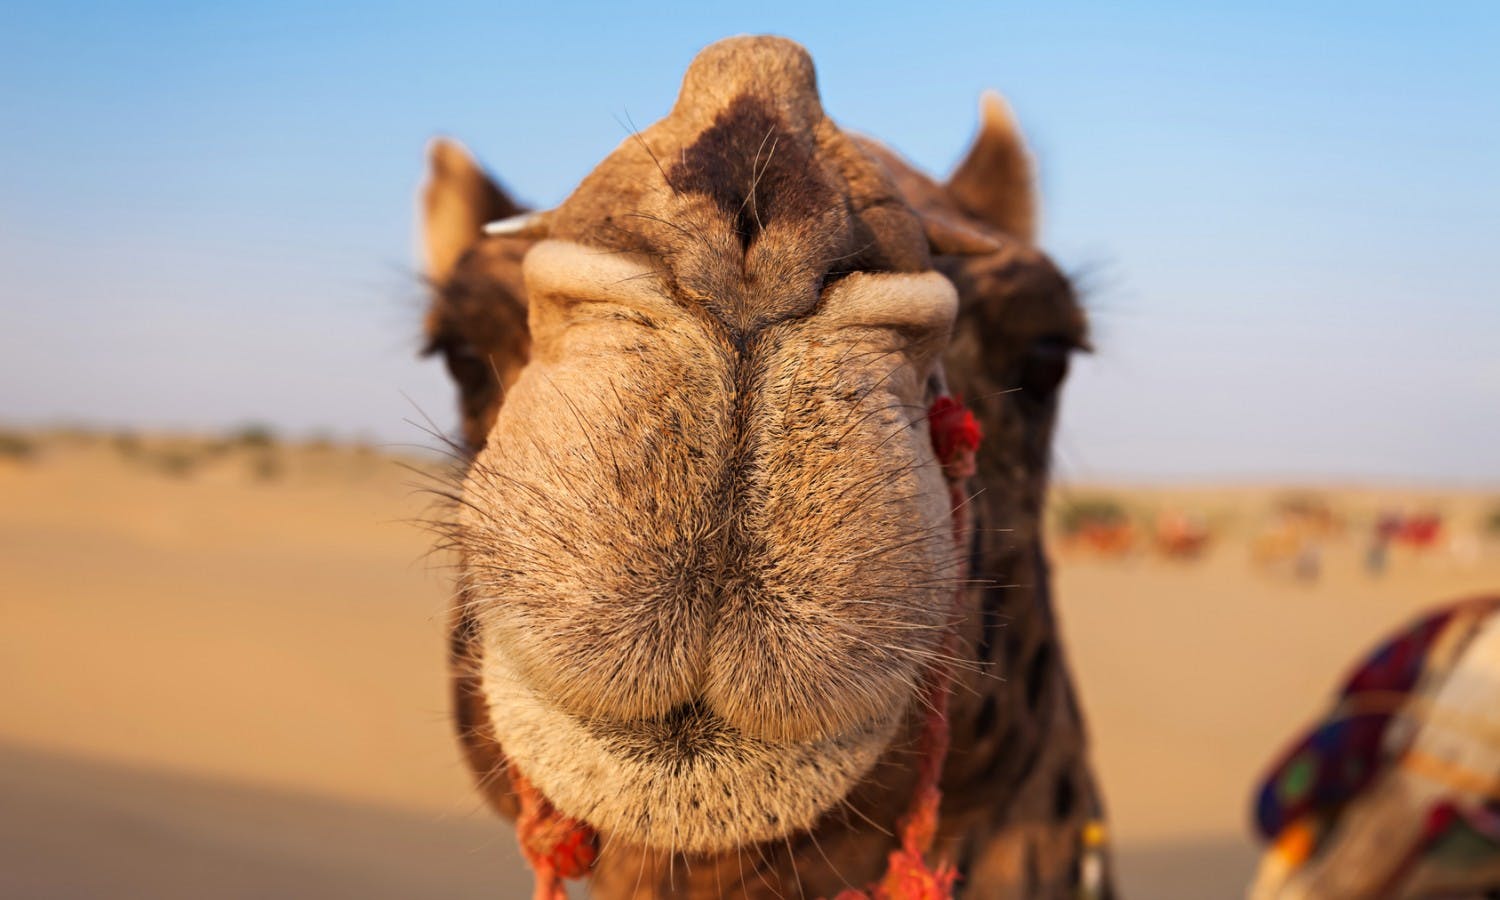 Camel Ride in Marrakech Palm Grove.jpg